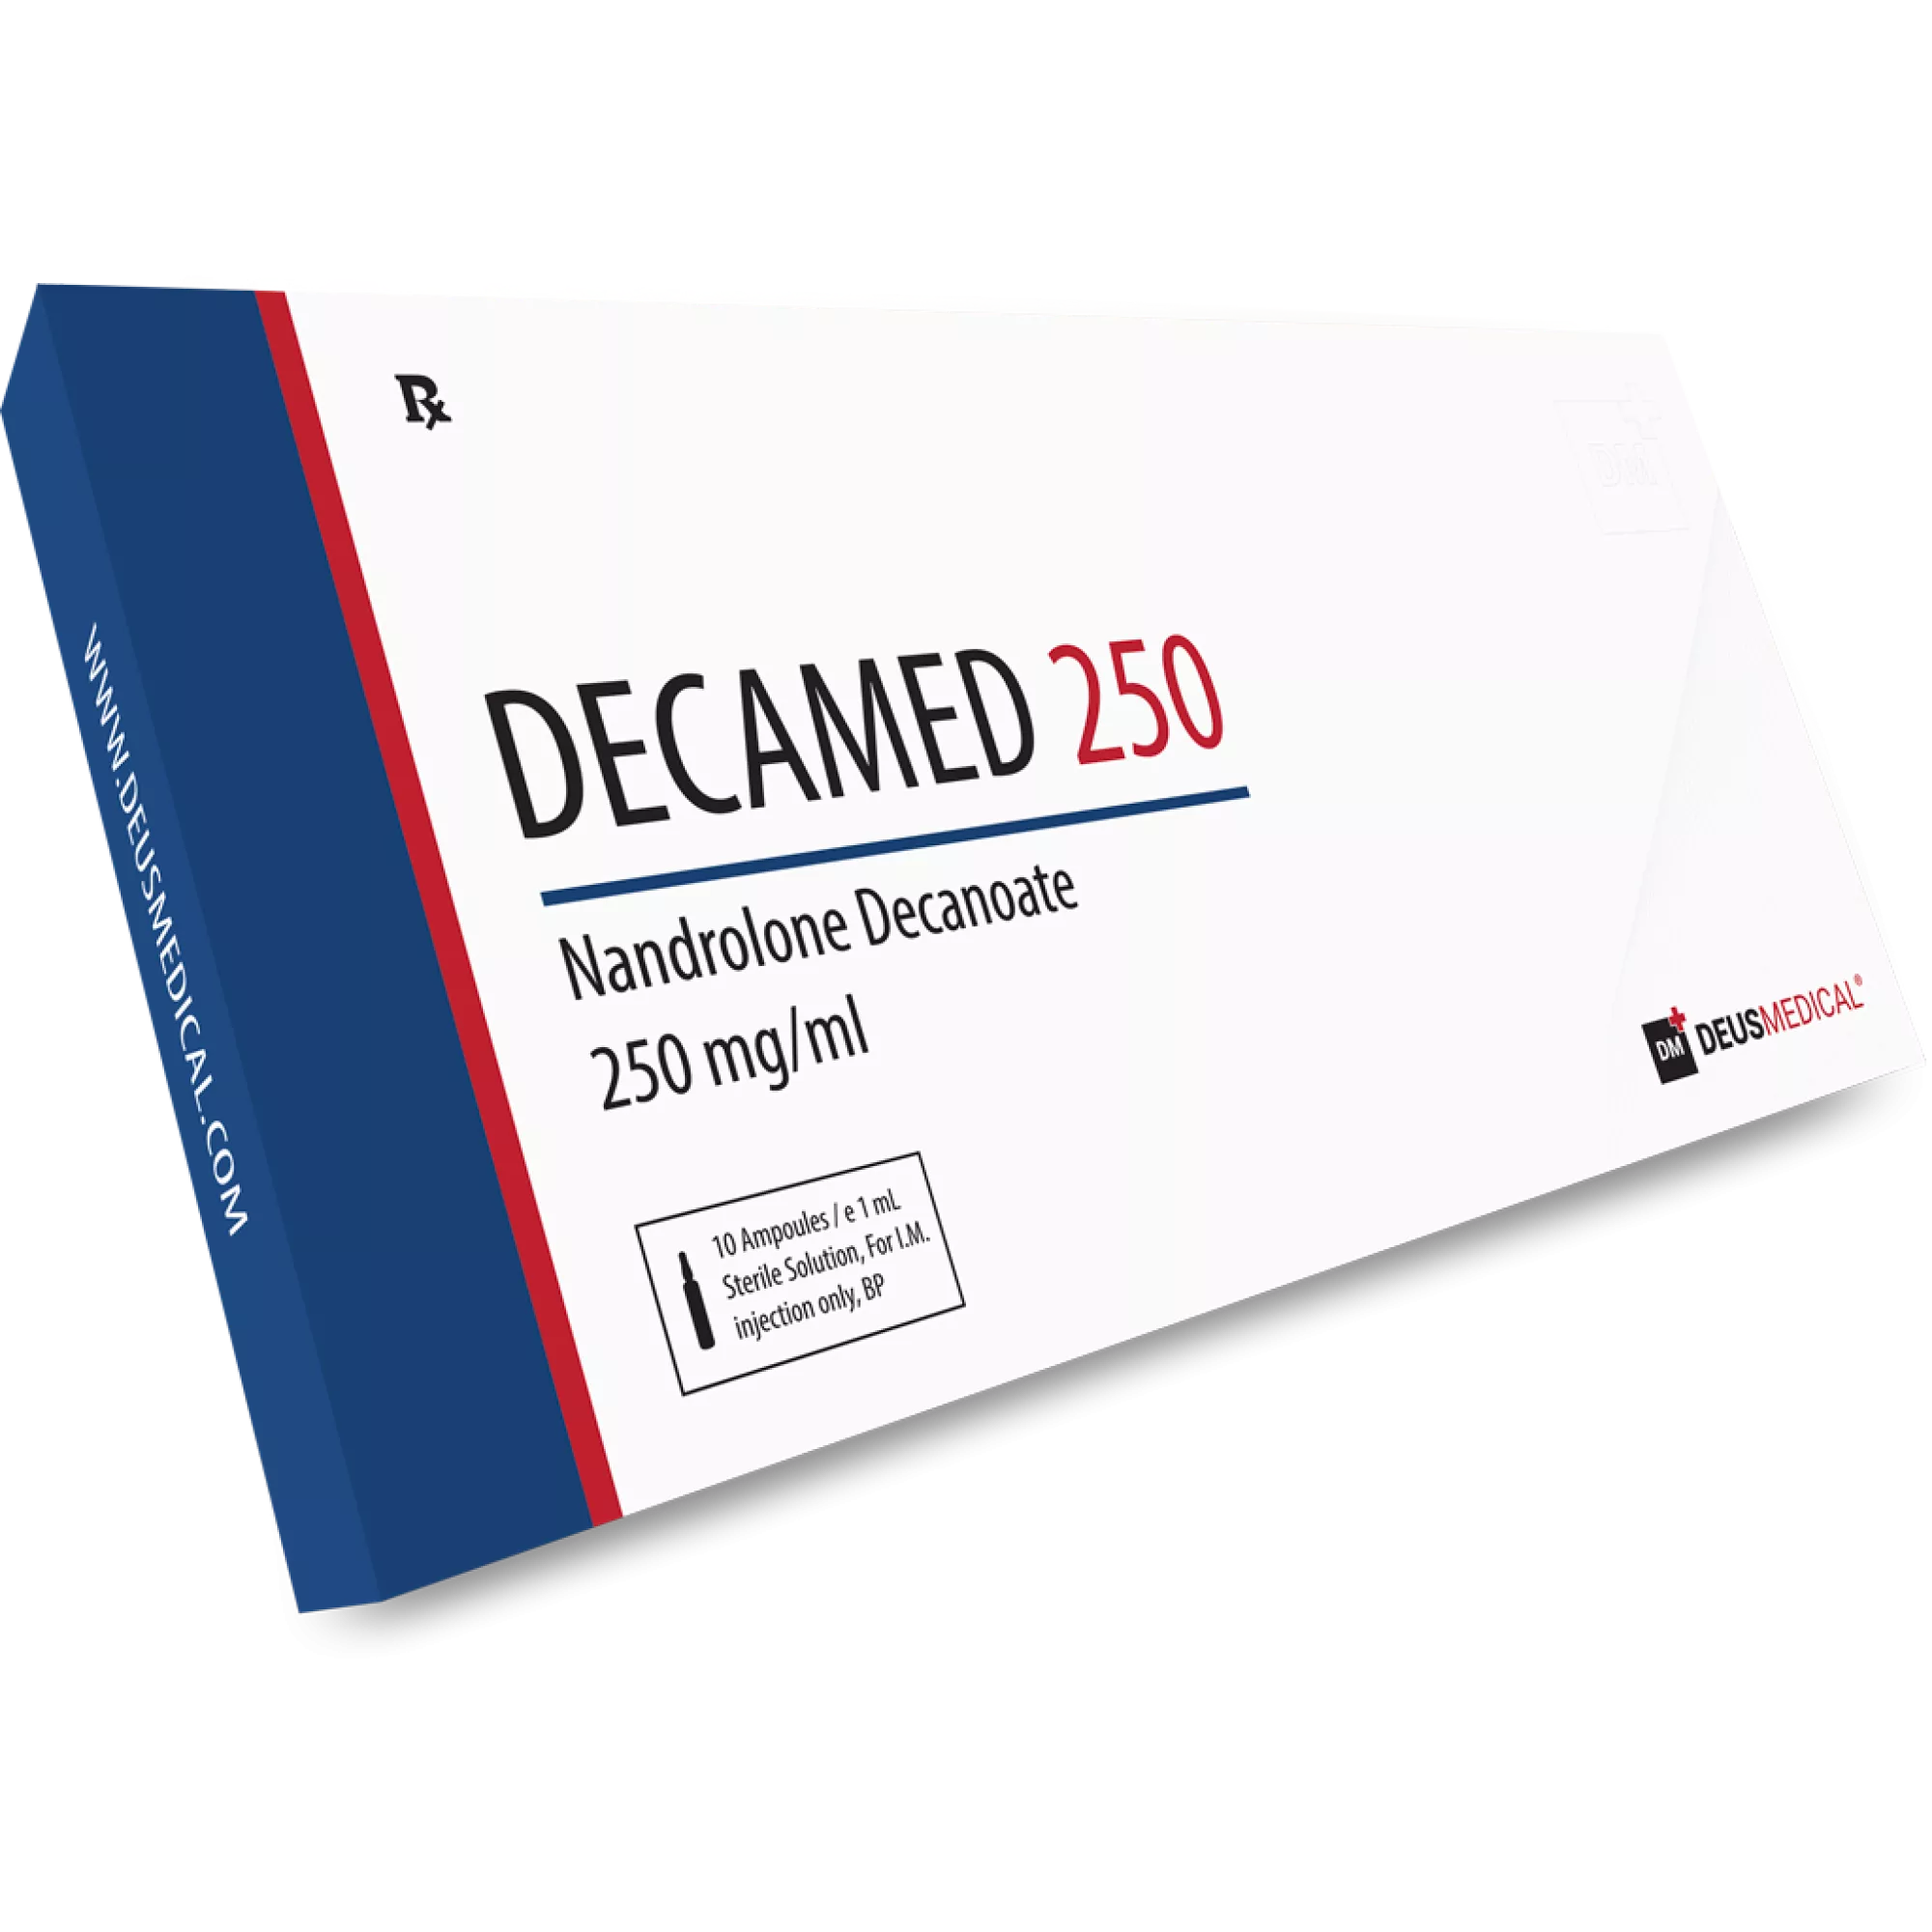 DECAMED 250 (Nandrolone Decanoate), Deus Medical, Buy Steroids Online - www.deuspower.shop